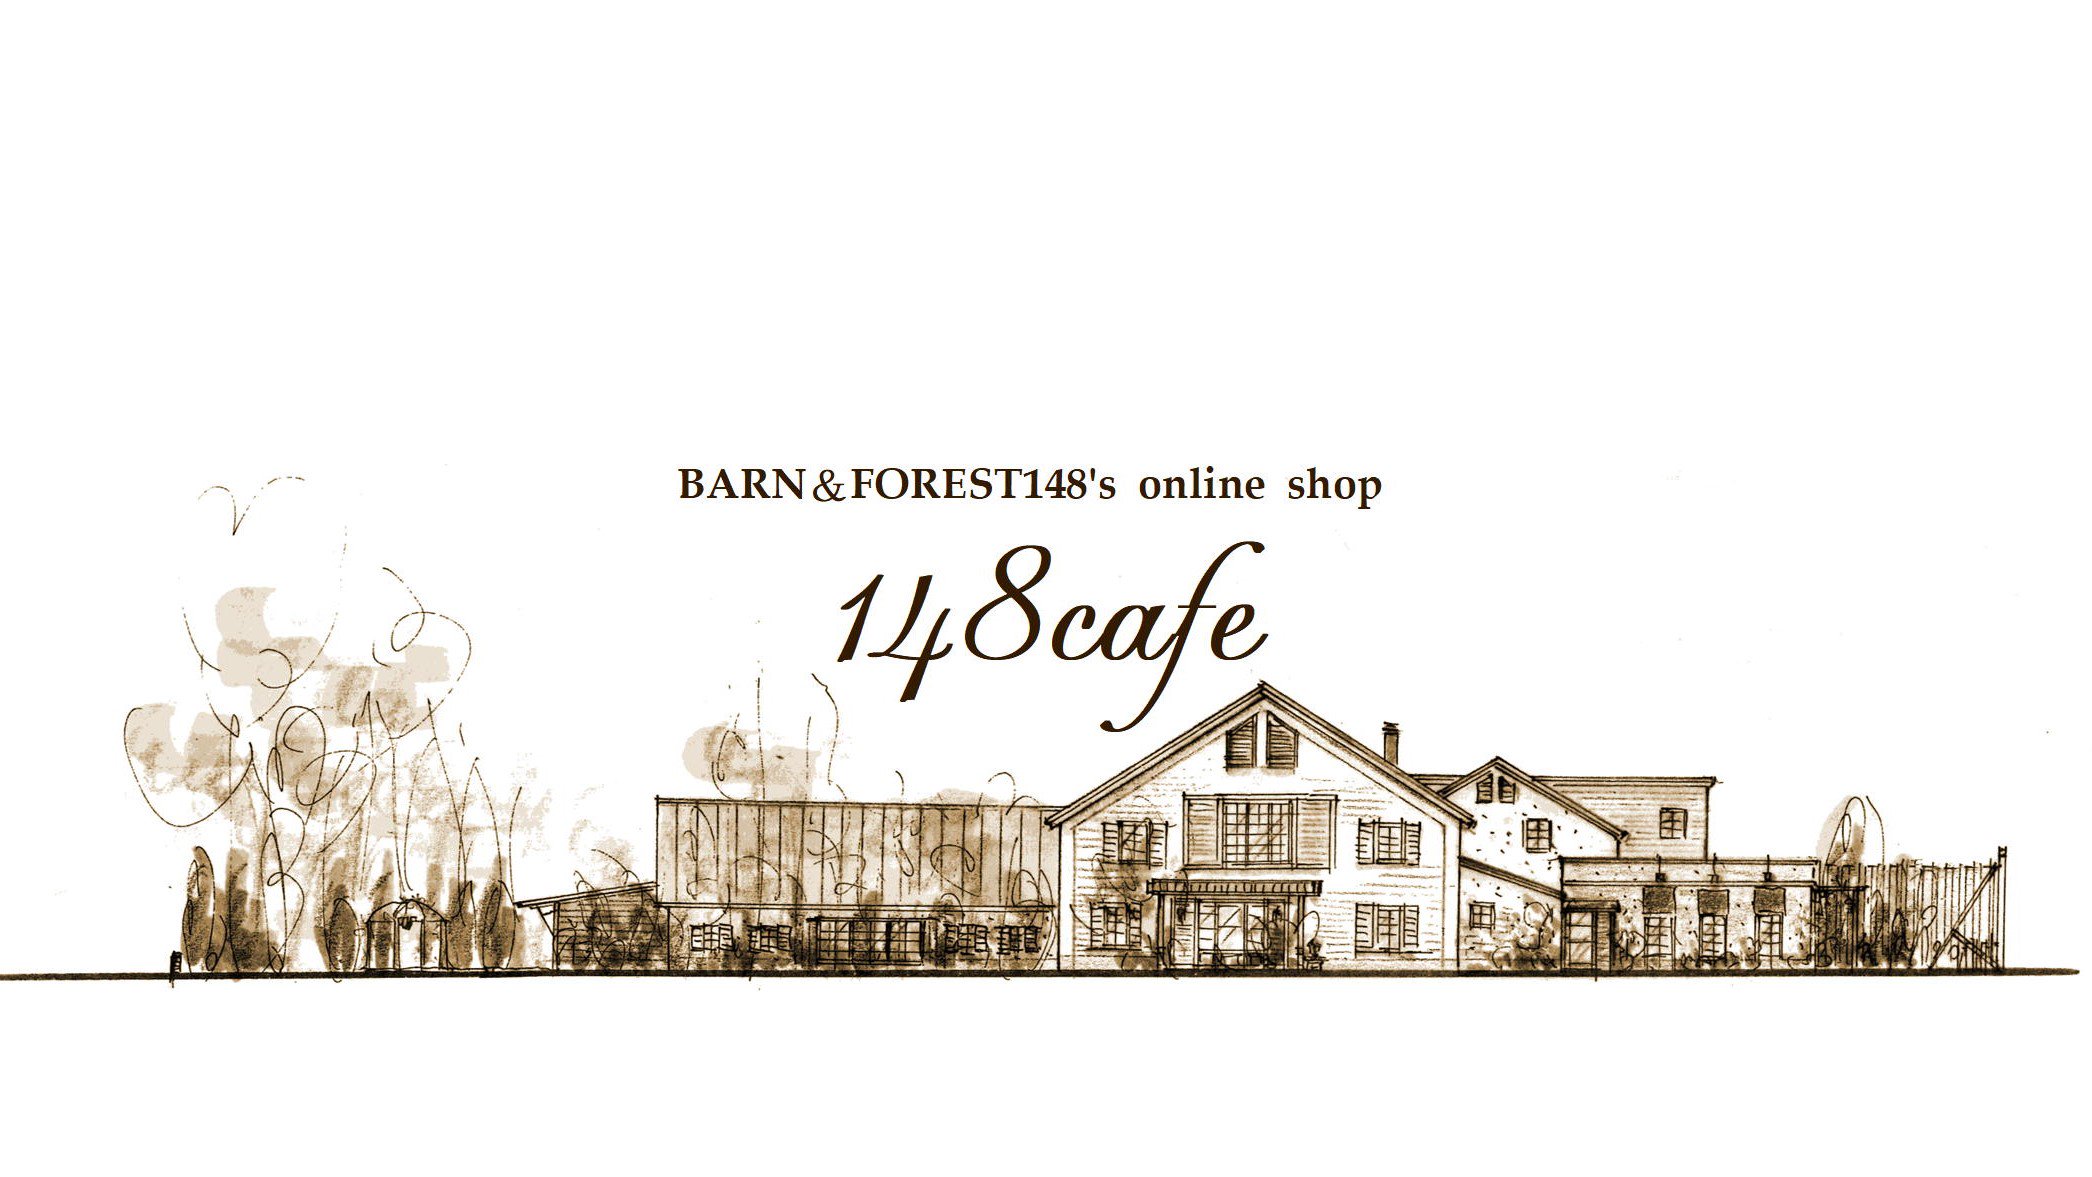 148cafe onlline shop   produced by Barn&Forest148